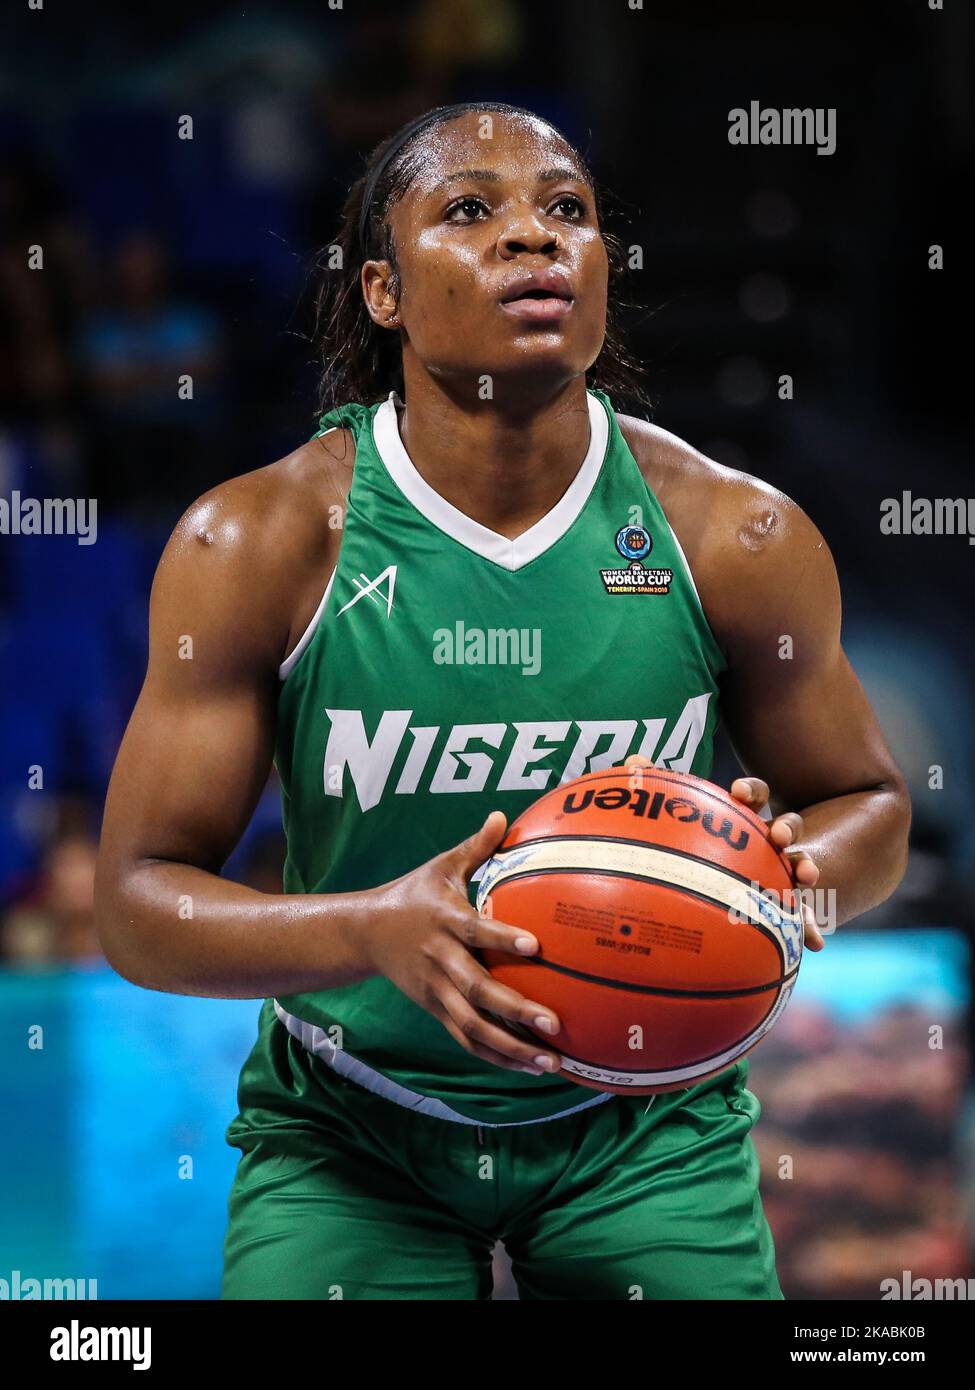 Spain, Tenerife, September 28, 2018: Nigerian female basketball player Sarah Imovbioh during the FIBA Women's Basketball World Cup in Spain. Stock Photo